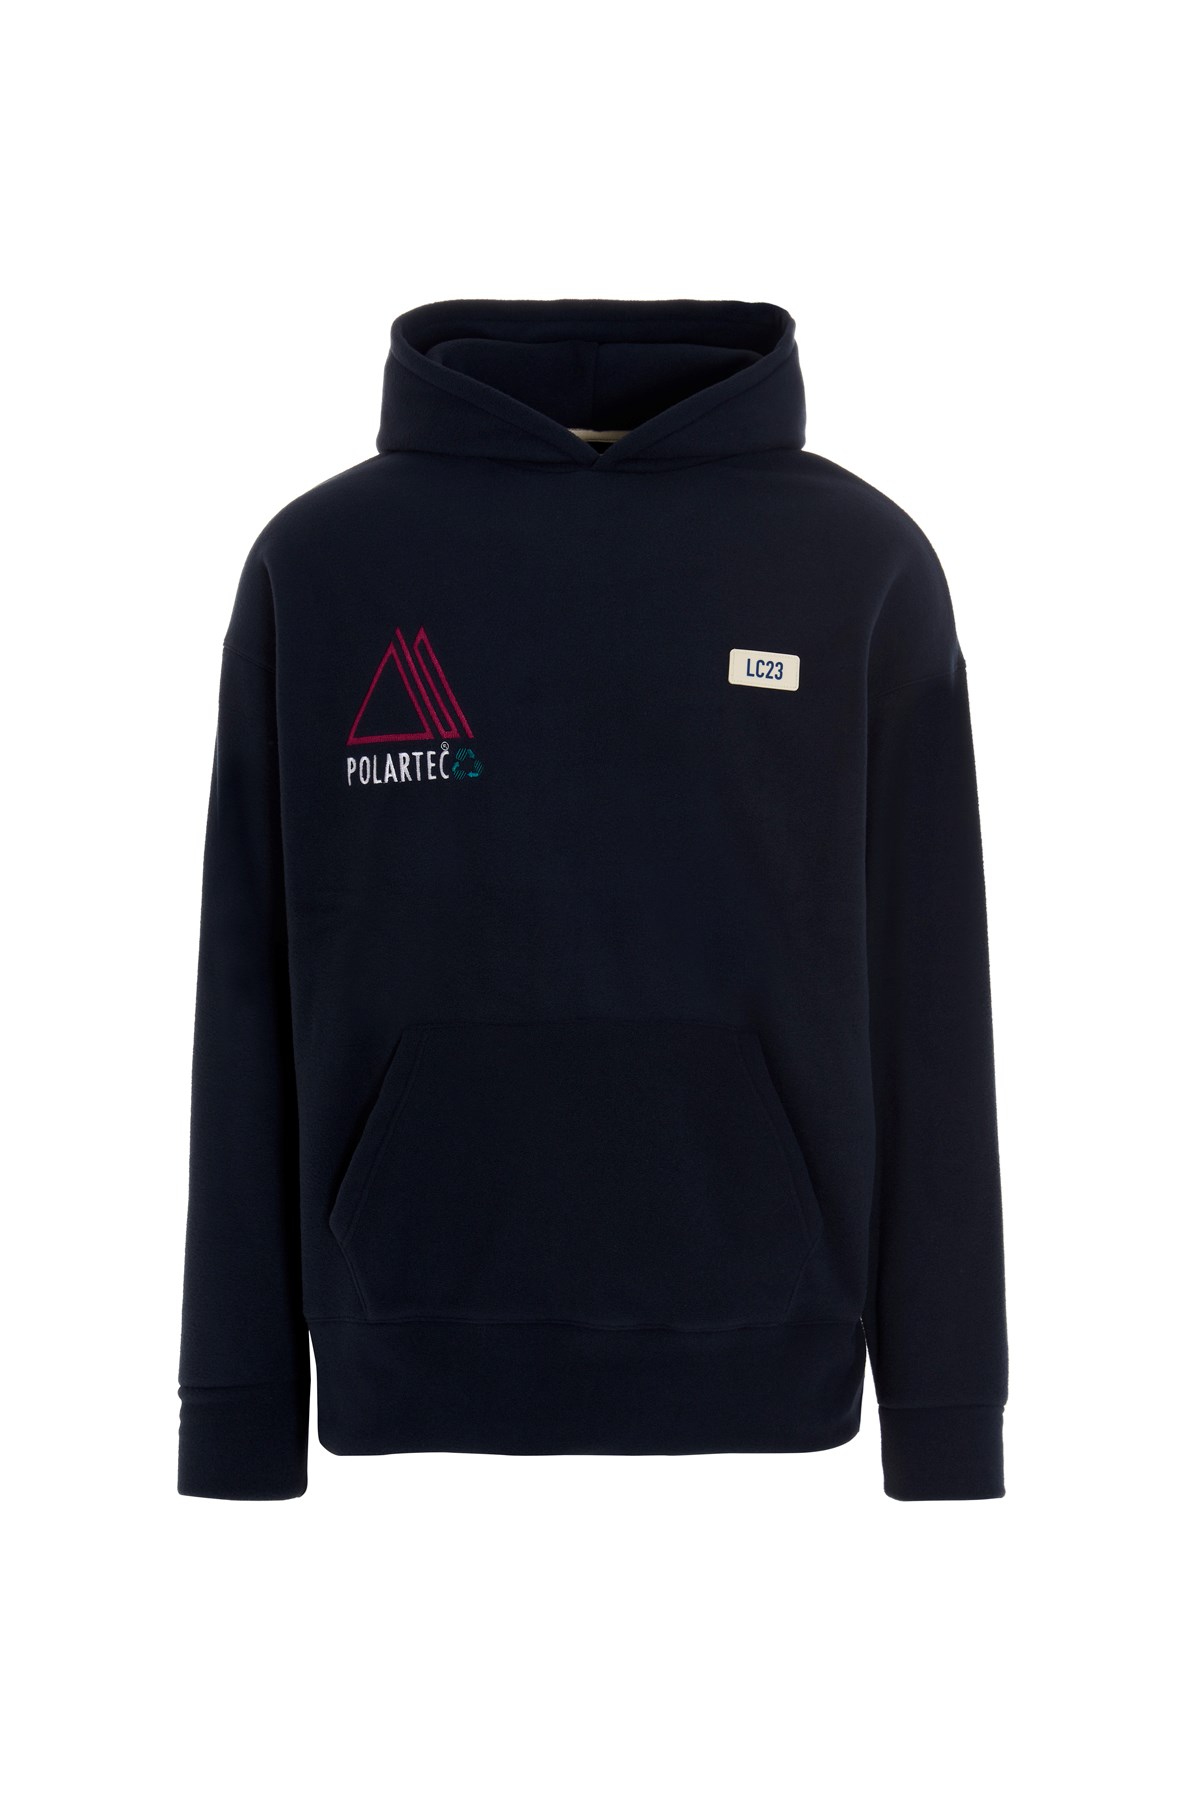 LC23 'Polartec Basic’ Sweatshirt